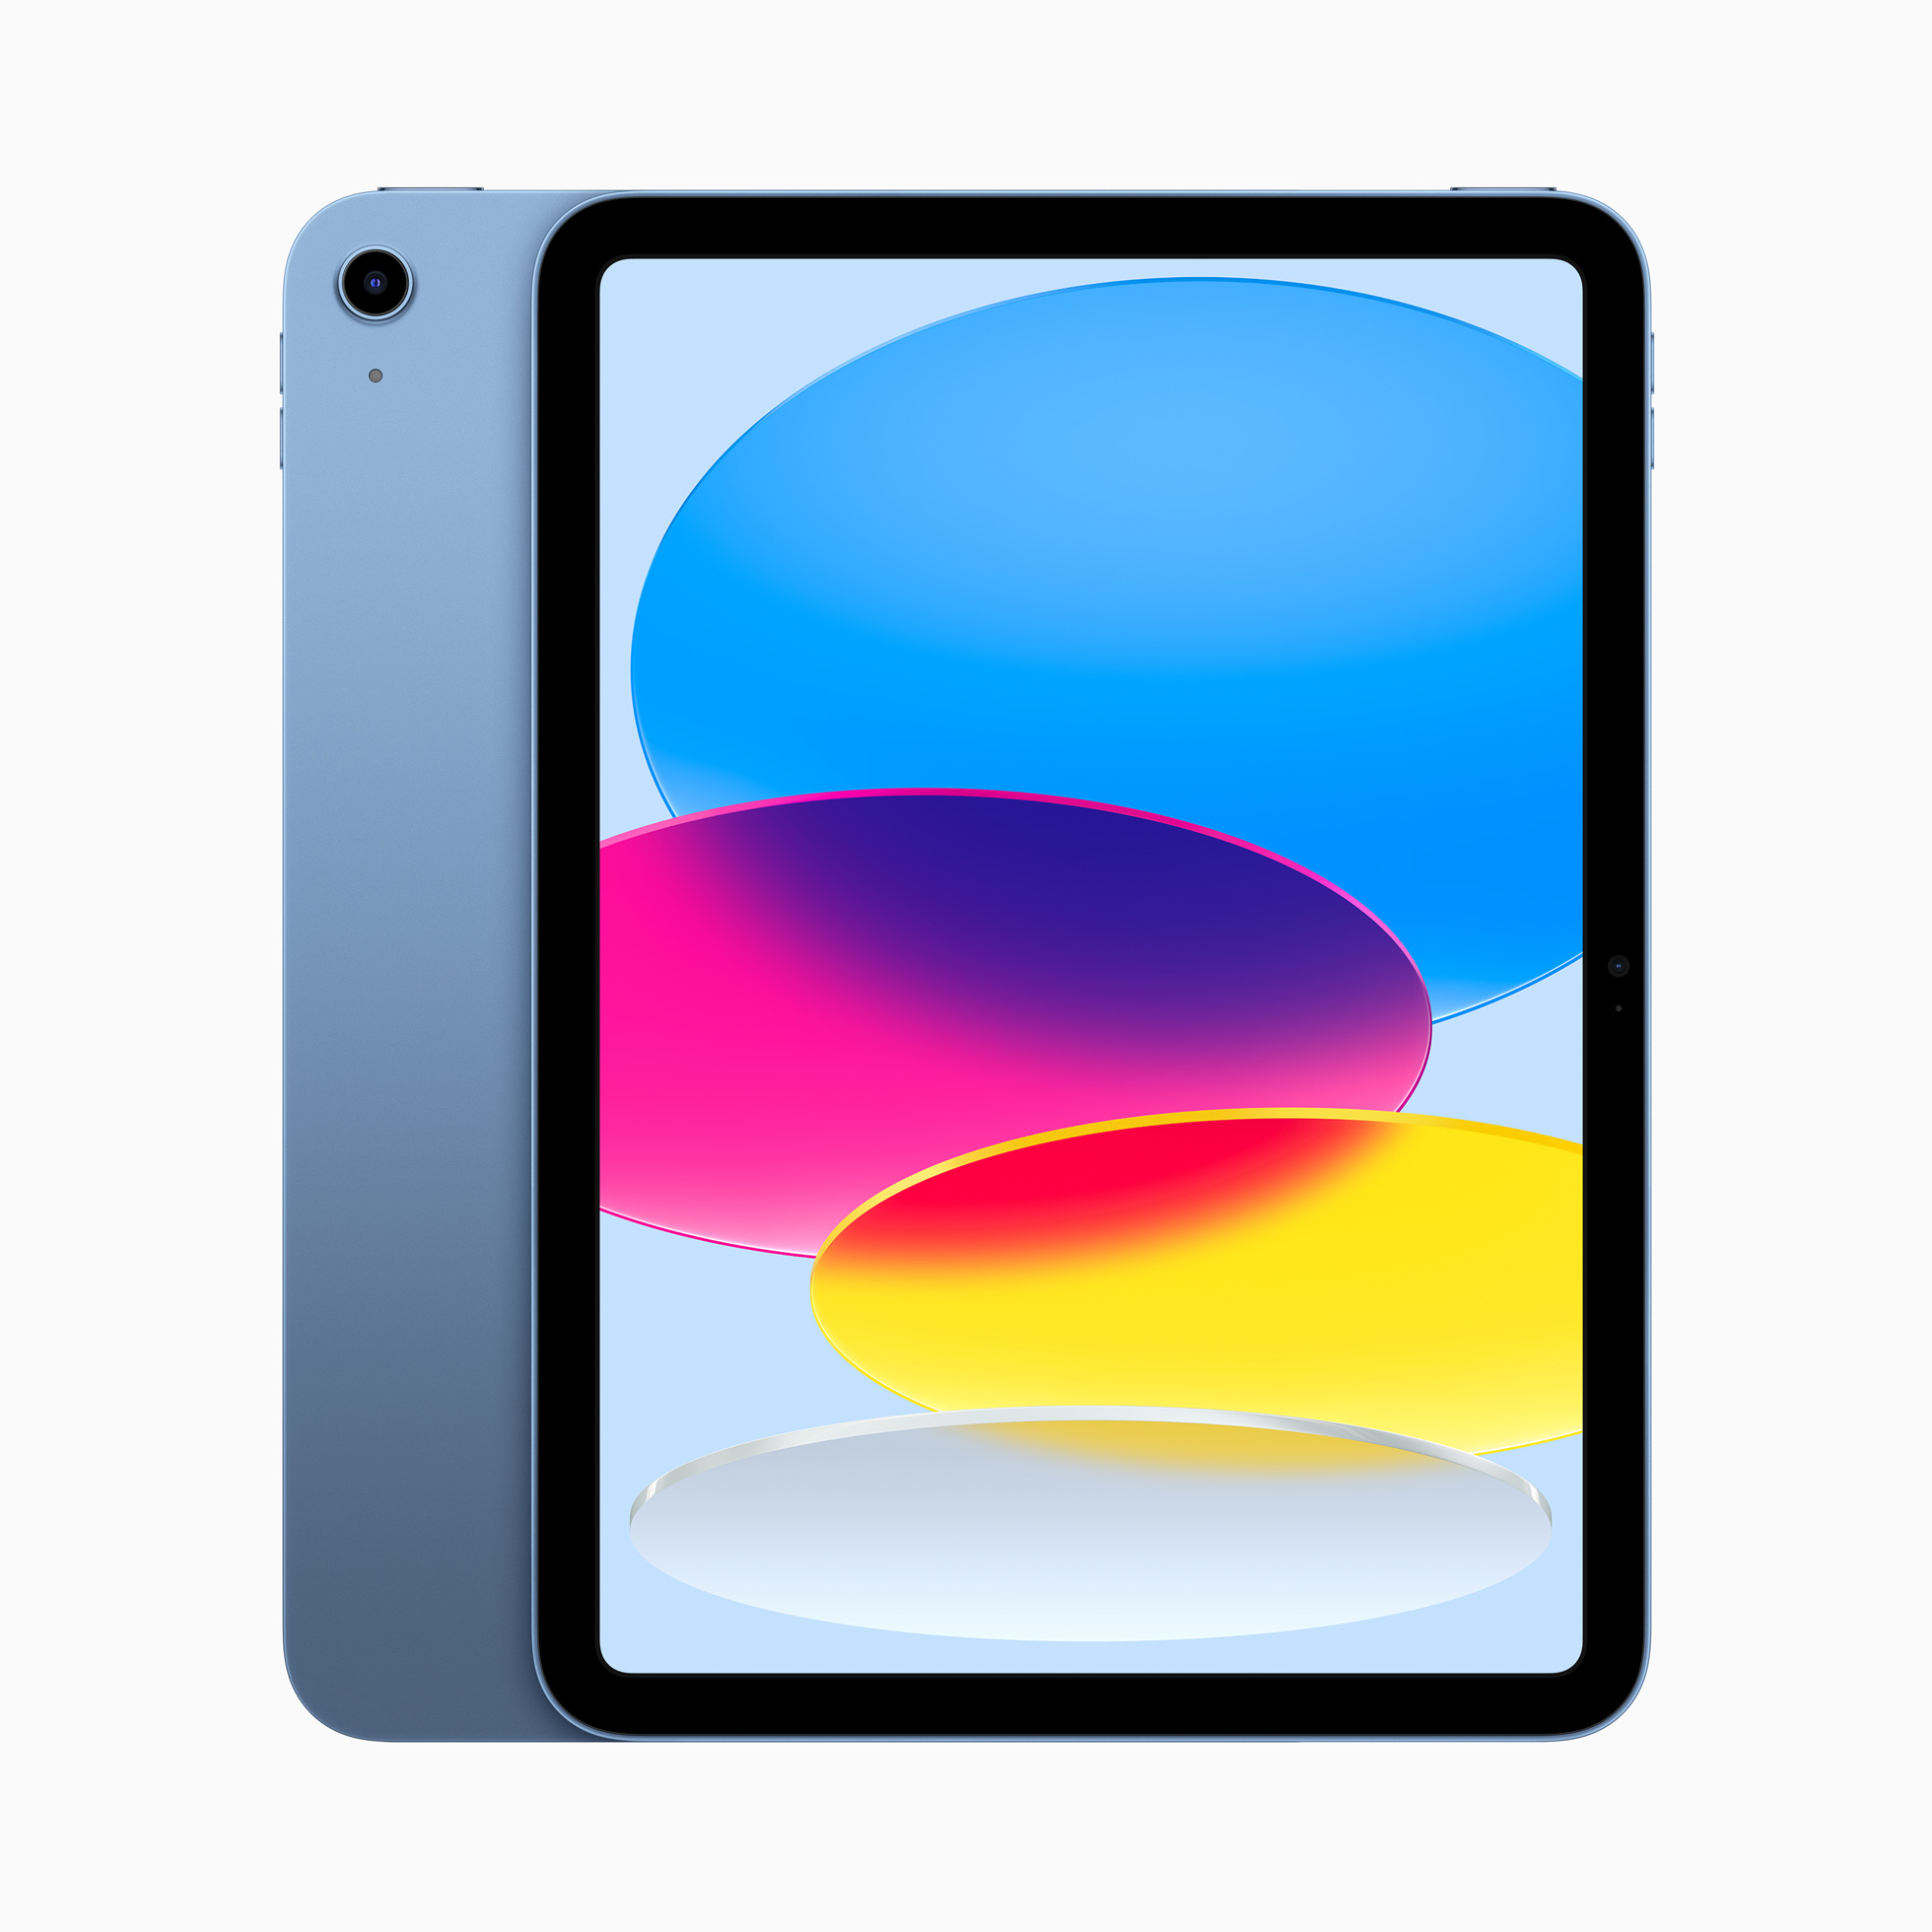 Apple 推出四種亮麗顏色的全新設計 iPad @3C 達人廖阿輝